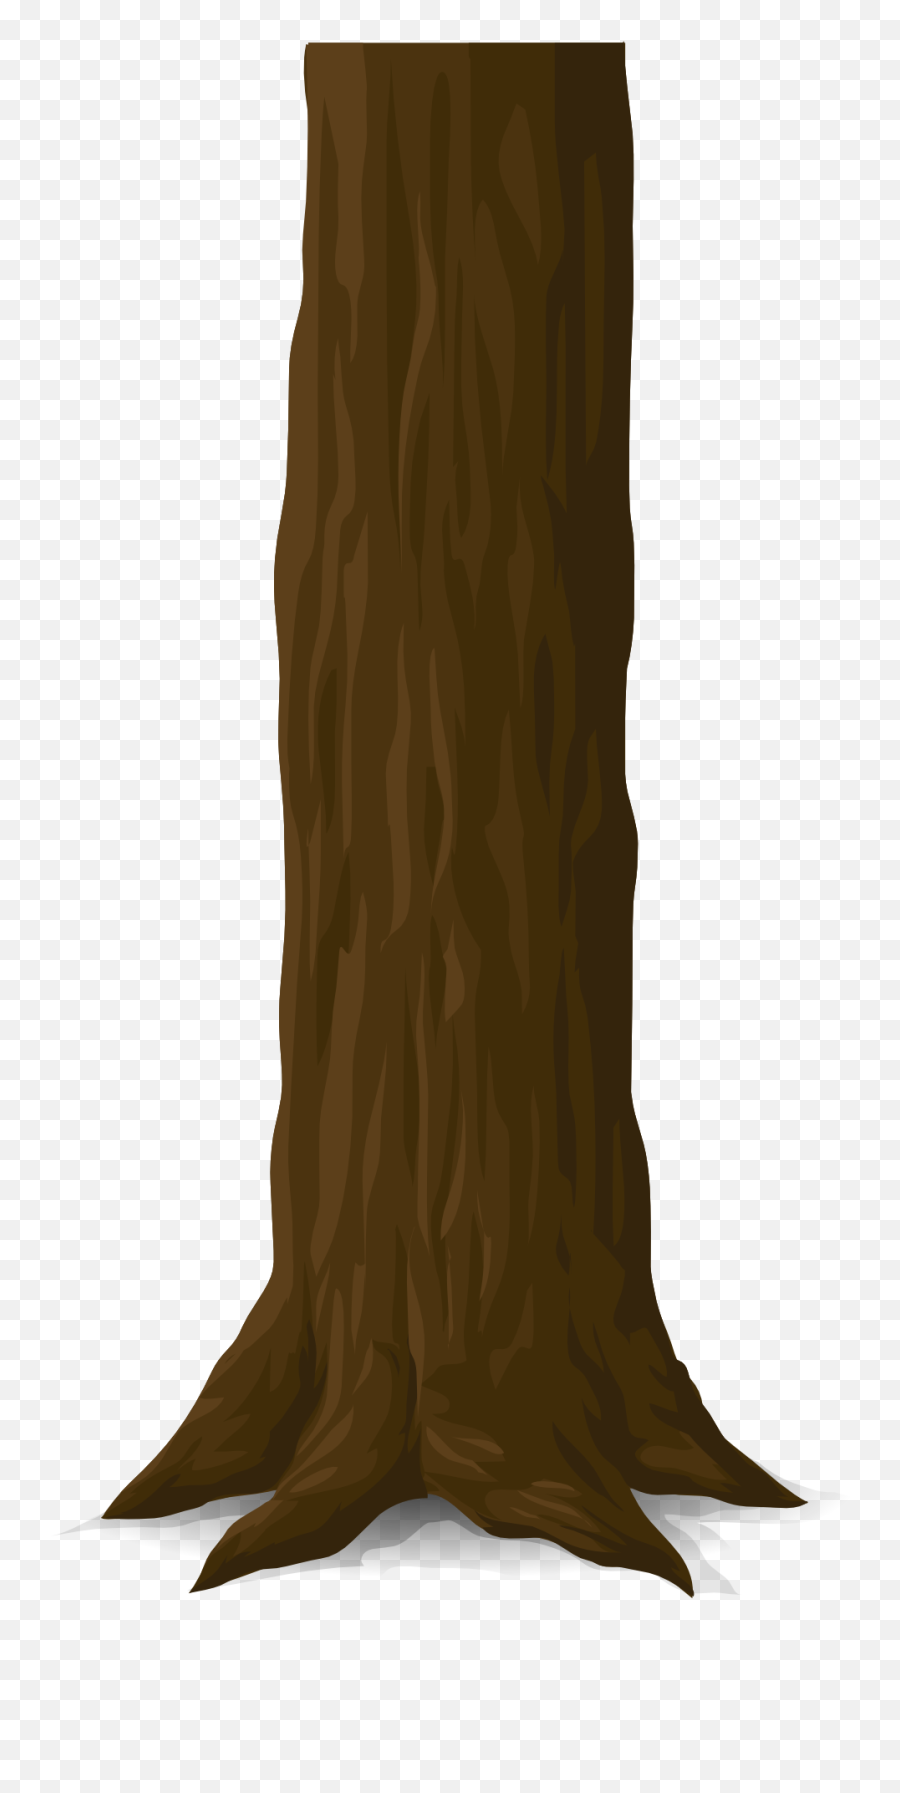 Tree Graphic Art Trunk Cartoon Free Image - Tree Stump Png,Cartoon Tree Transparent Background